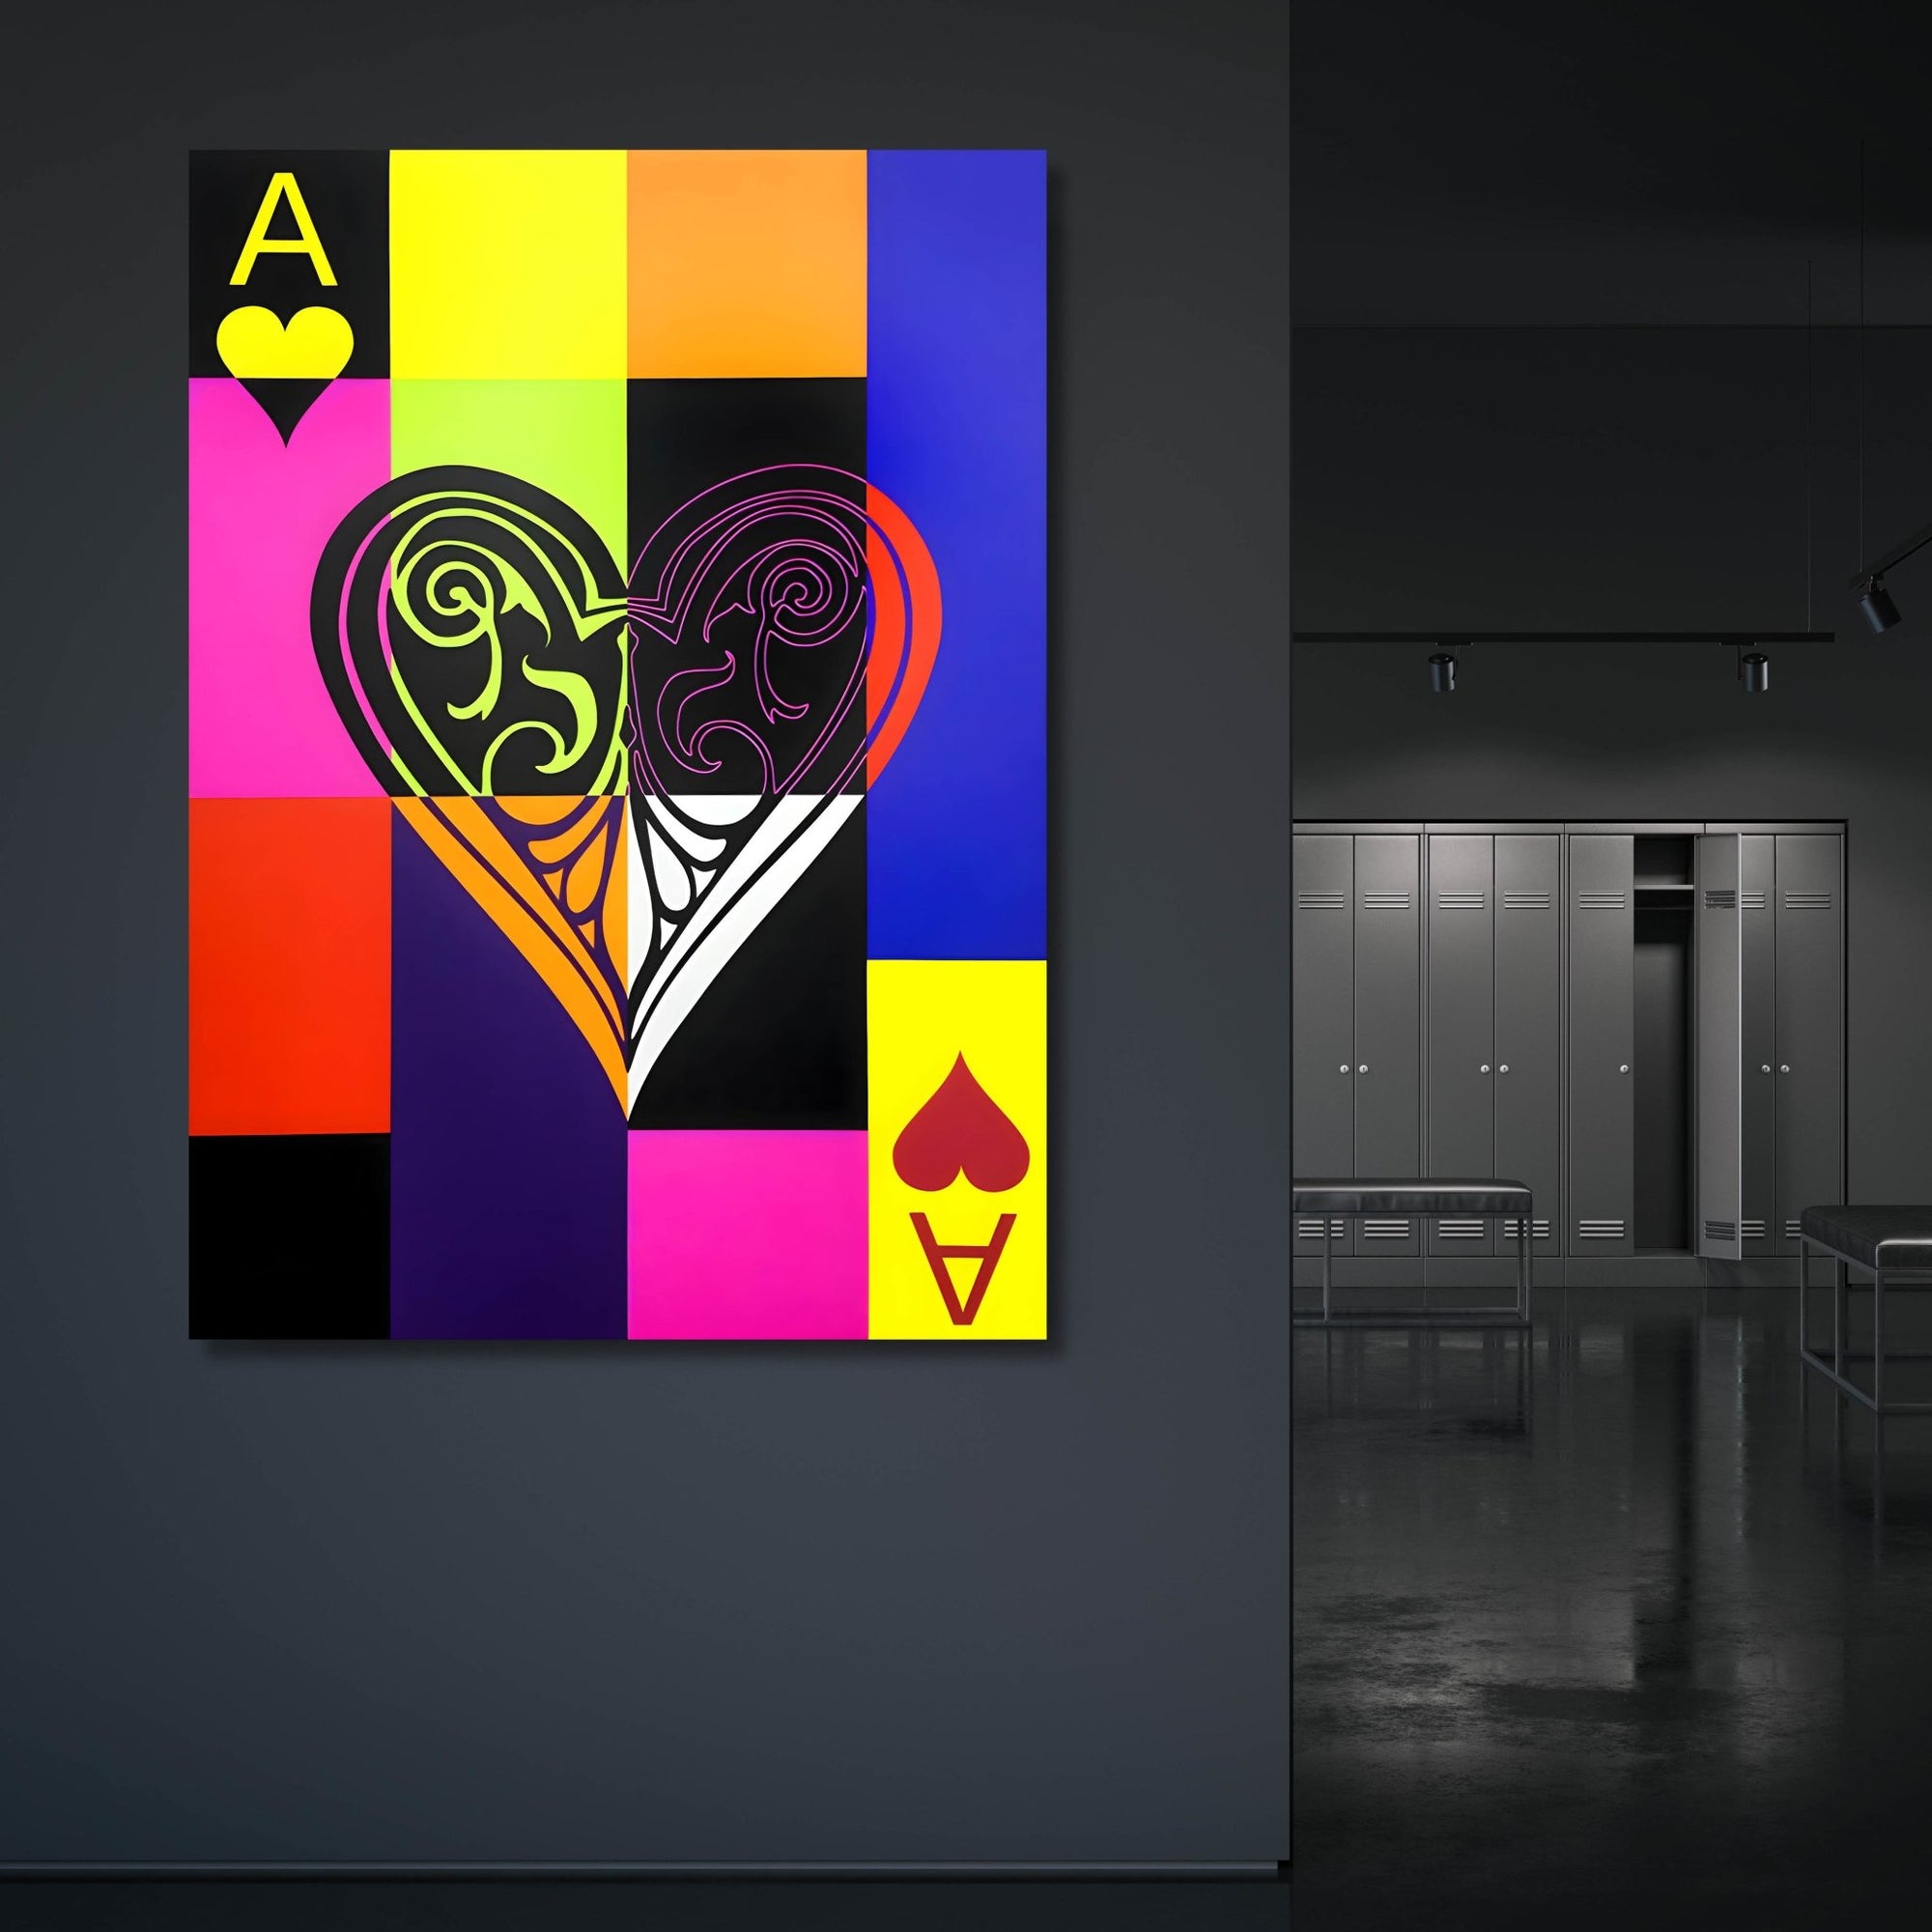 Ace Of Hearts Art - The Trendy Art